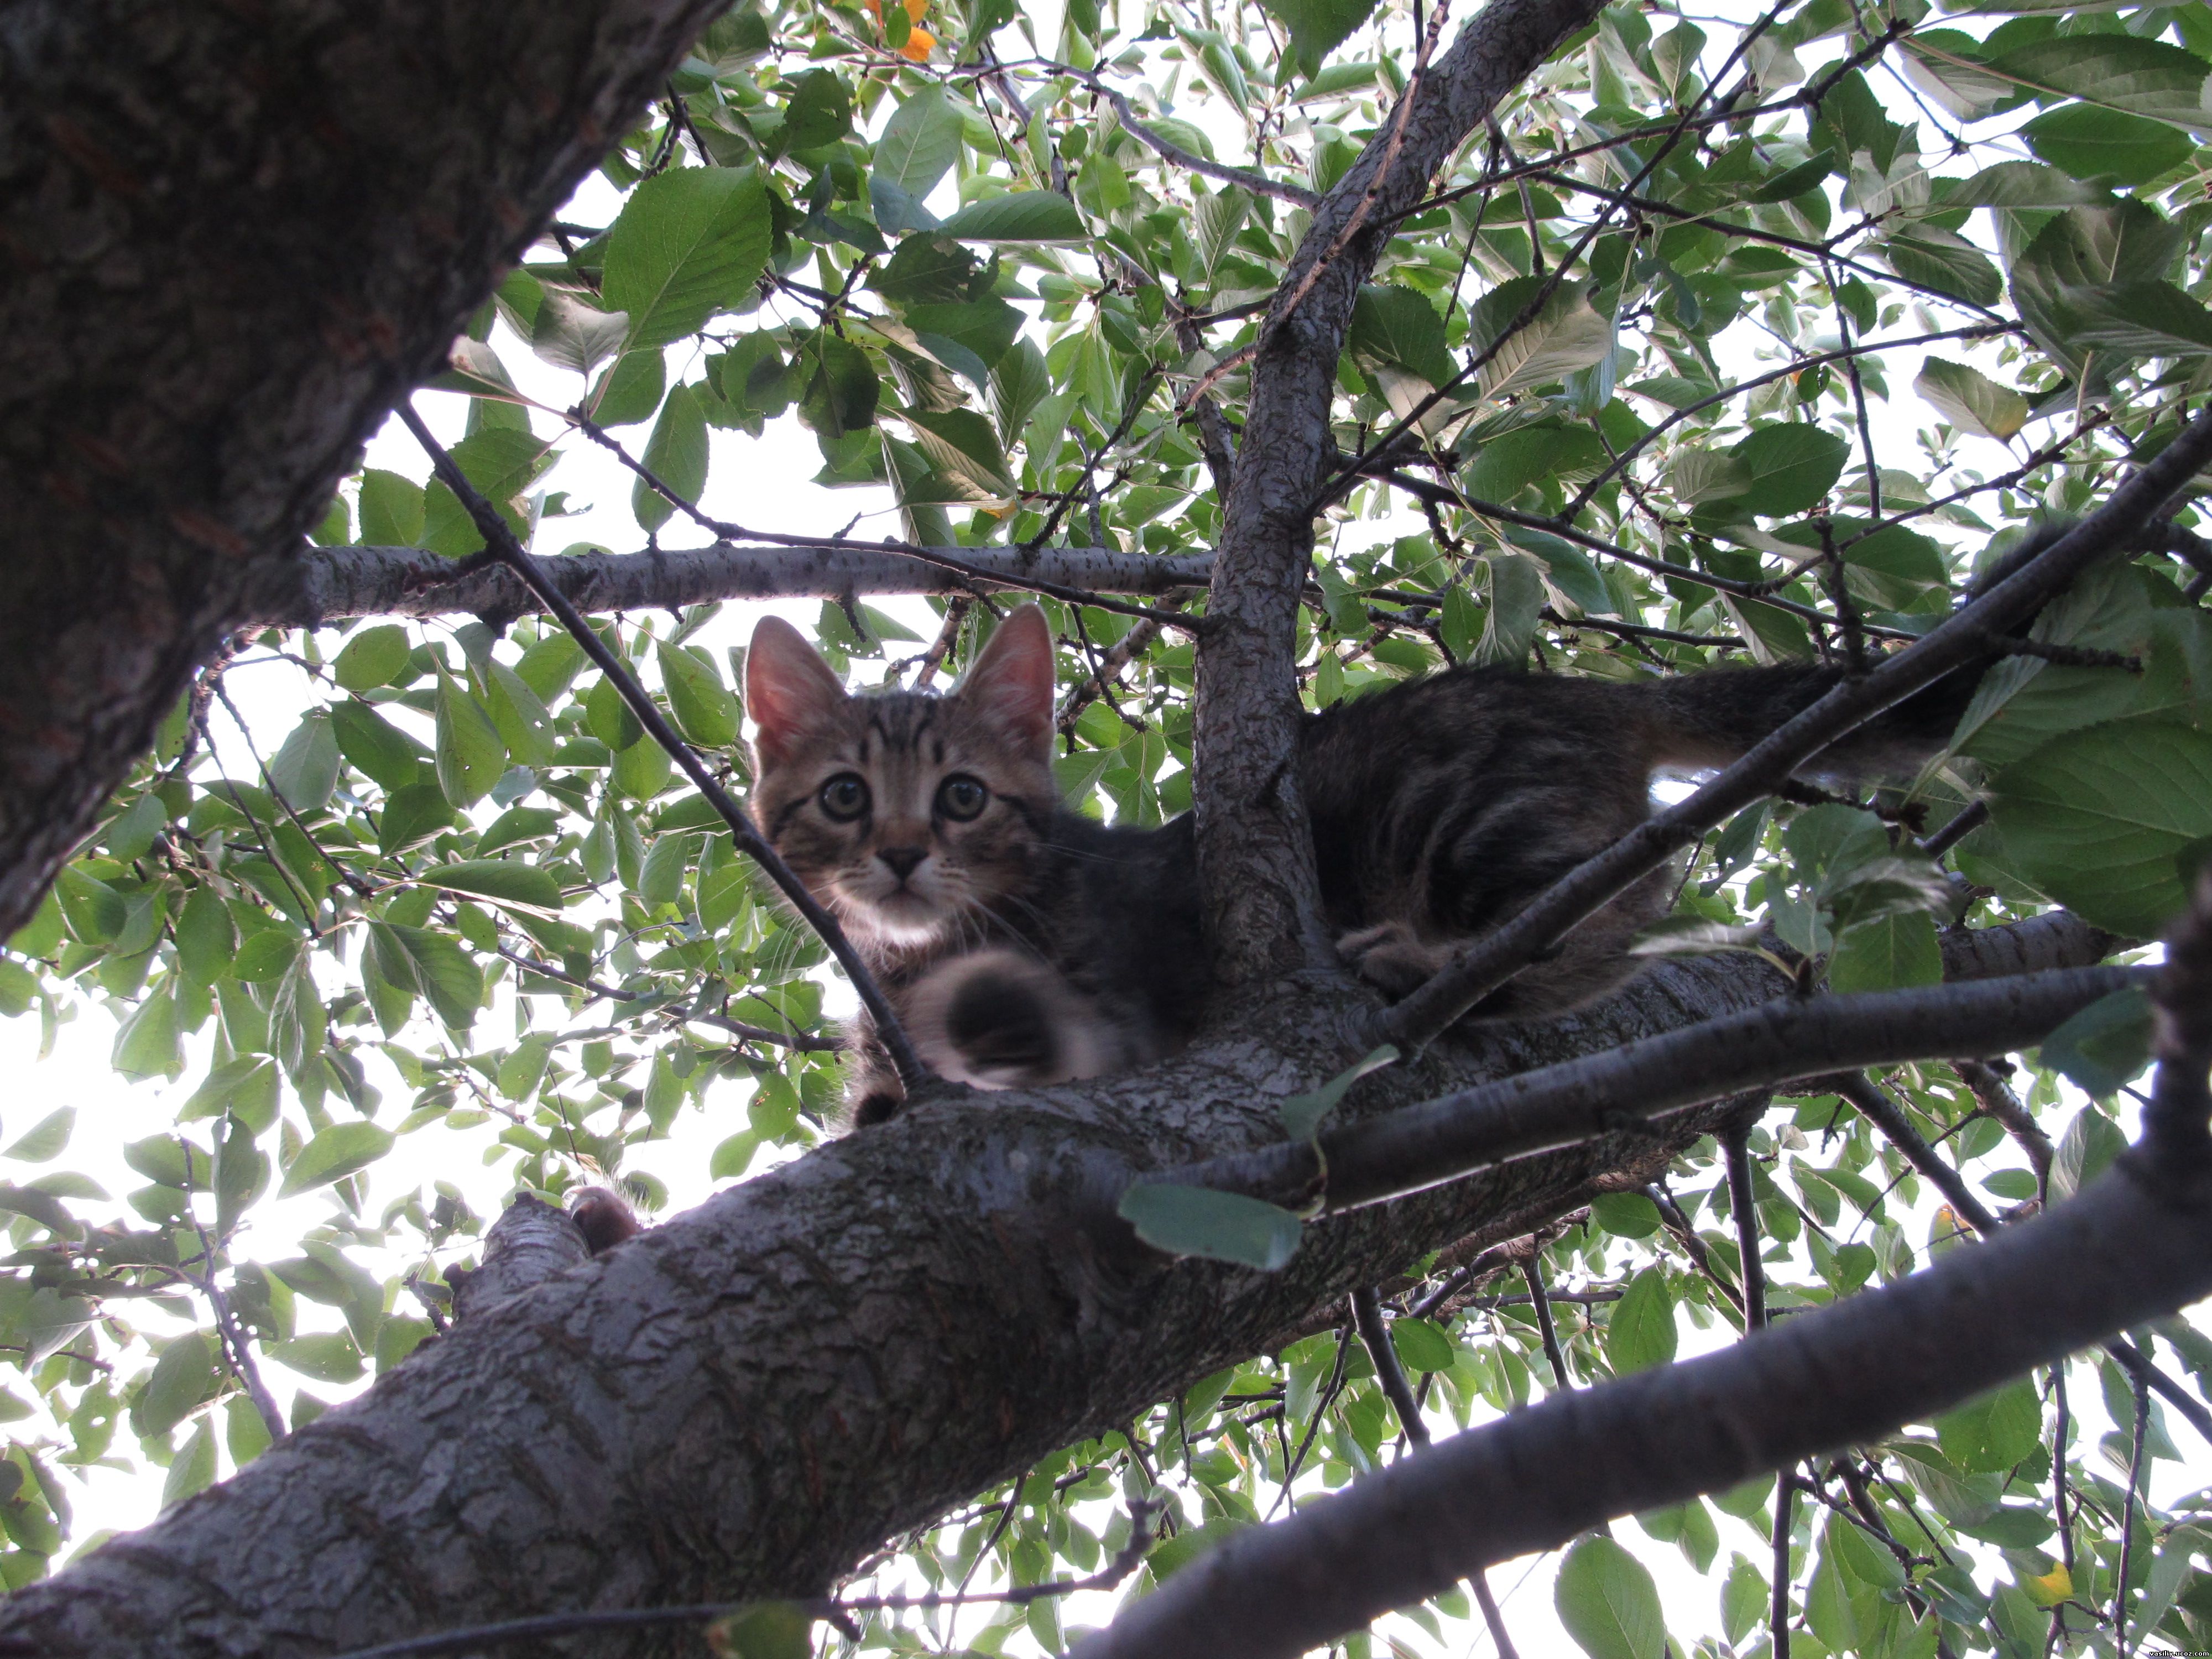 The kitten in the tree